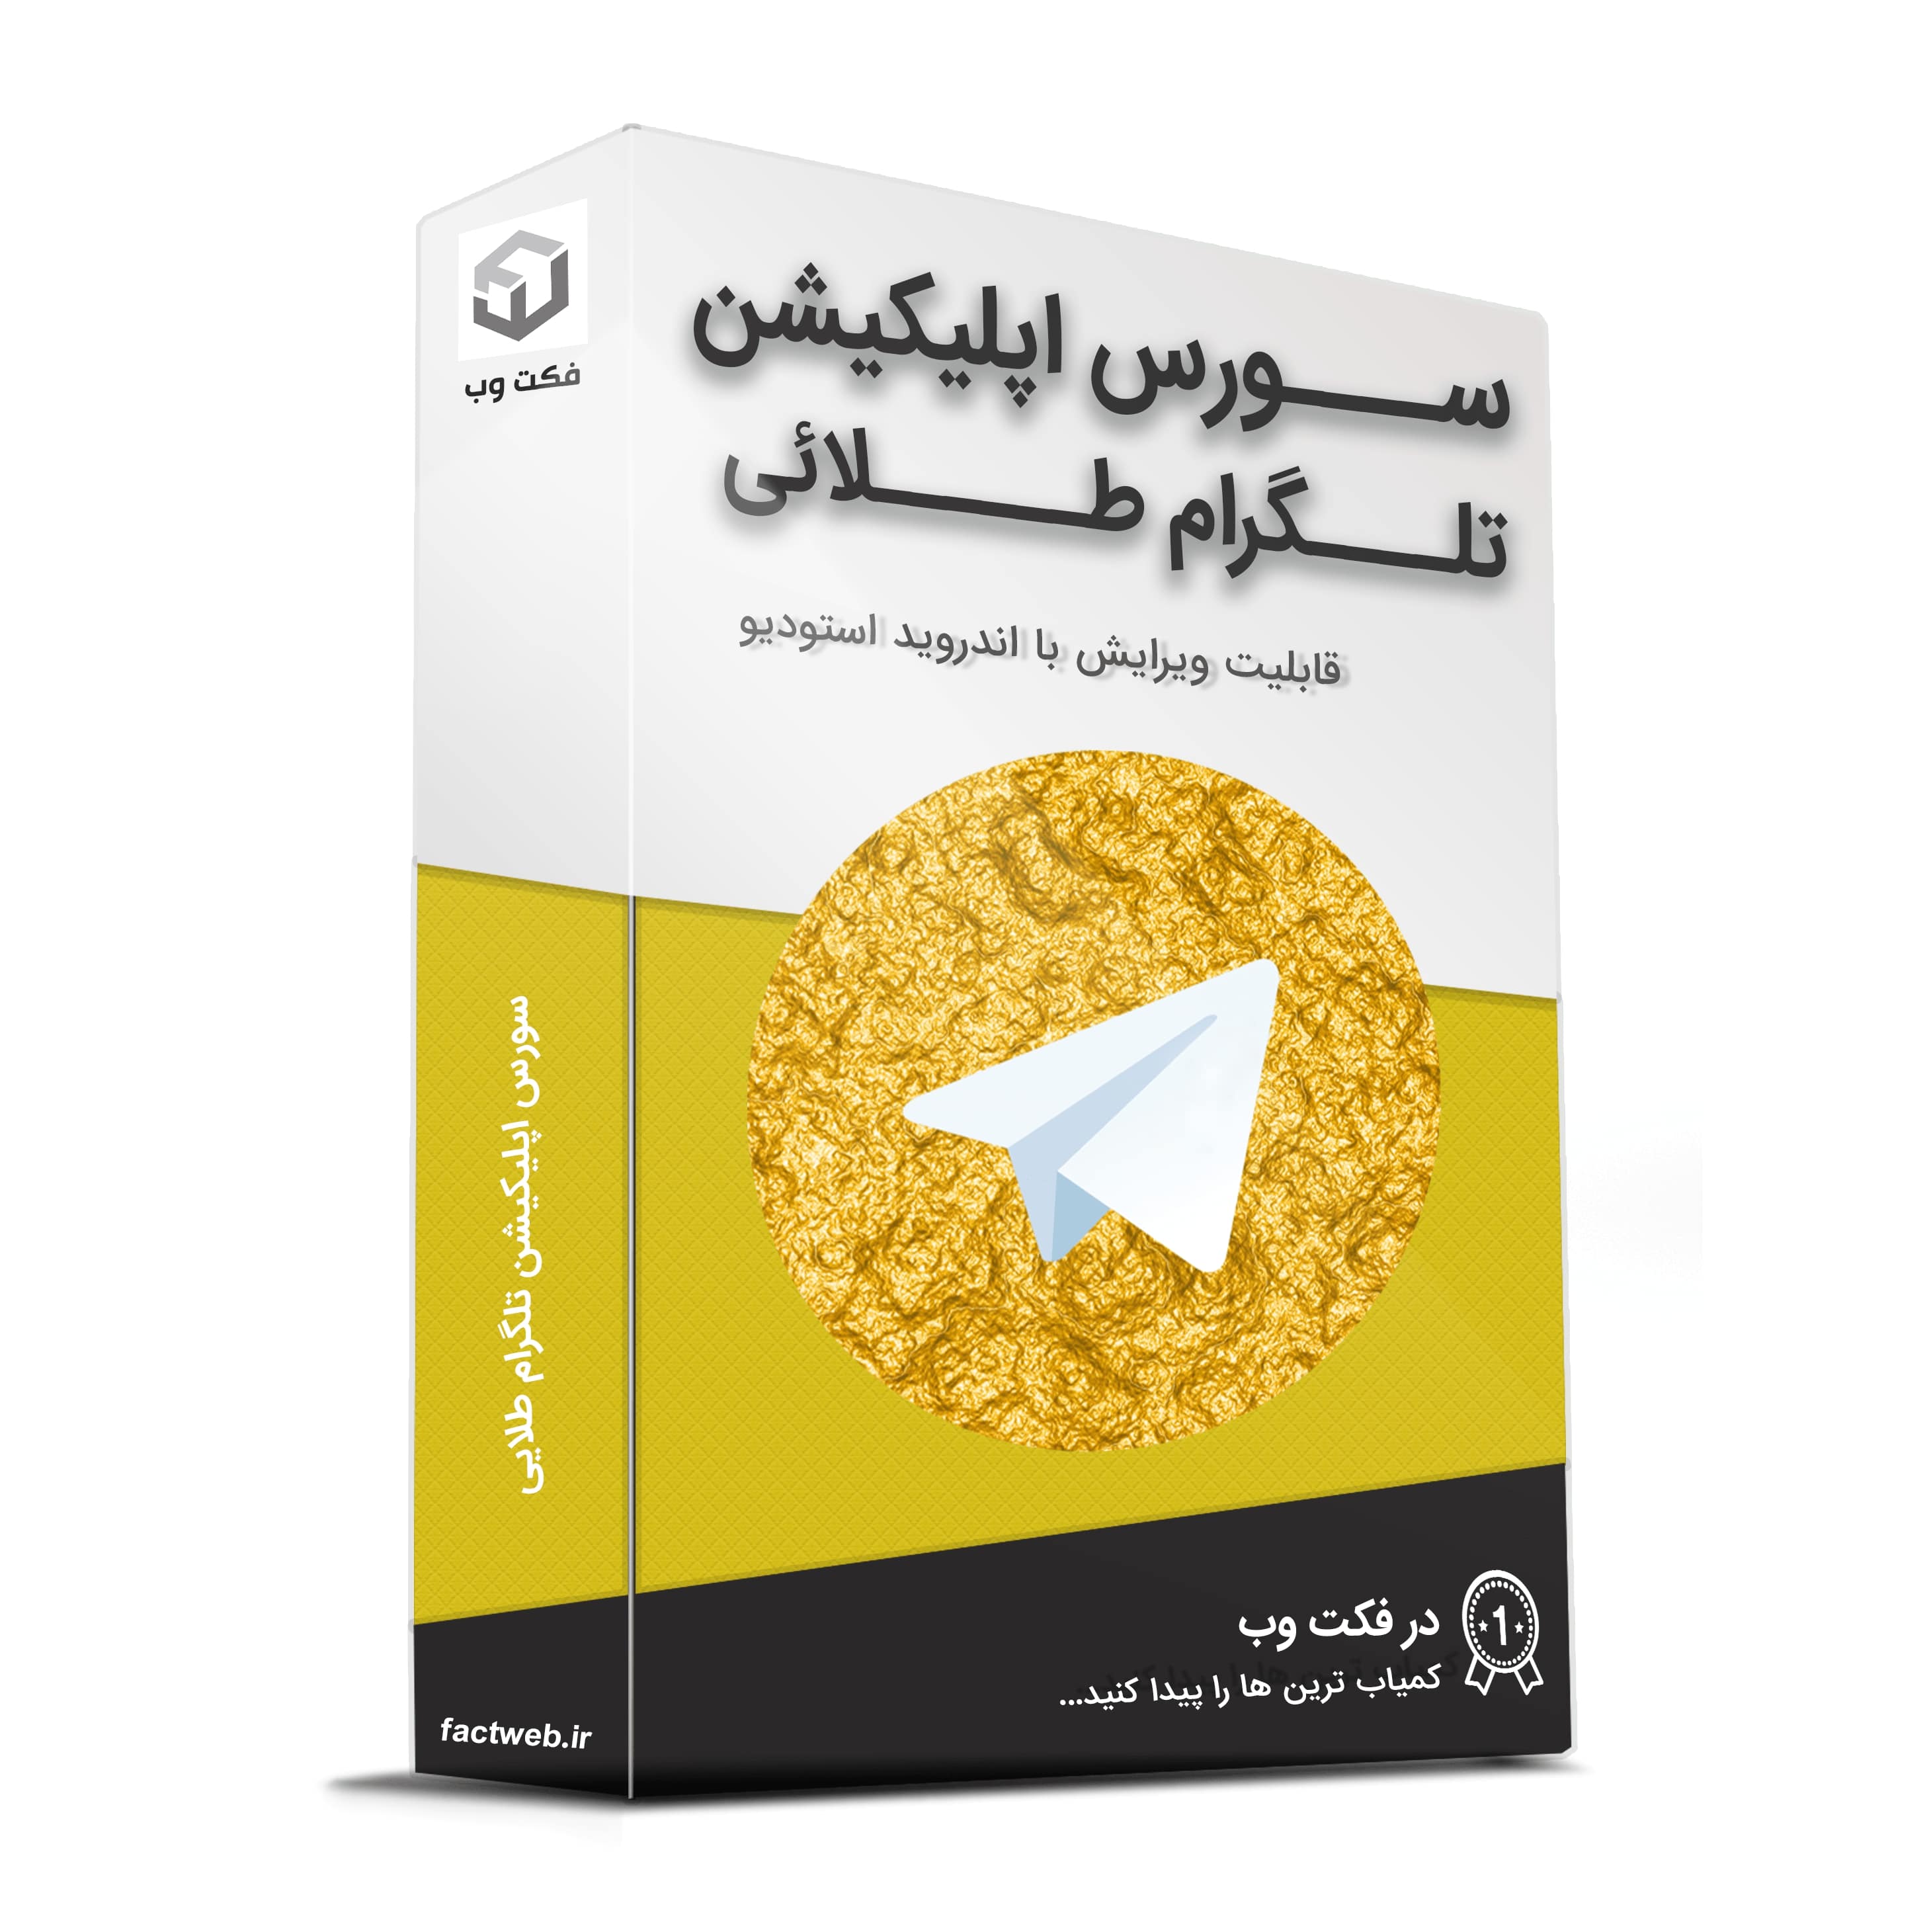 سورس اپلیکیشن تلگرام طلایی